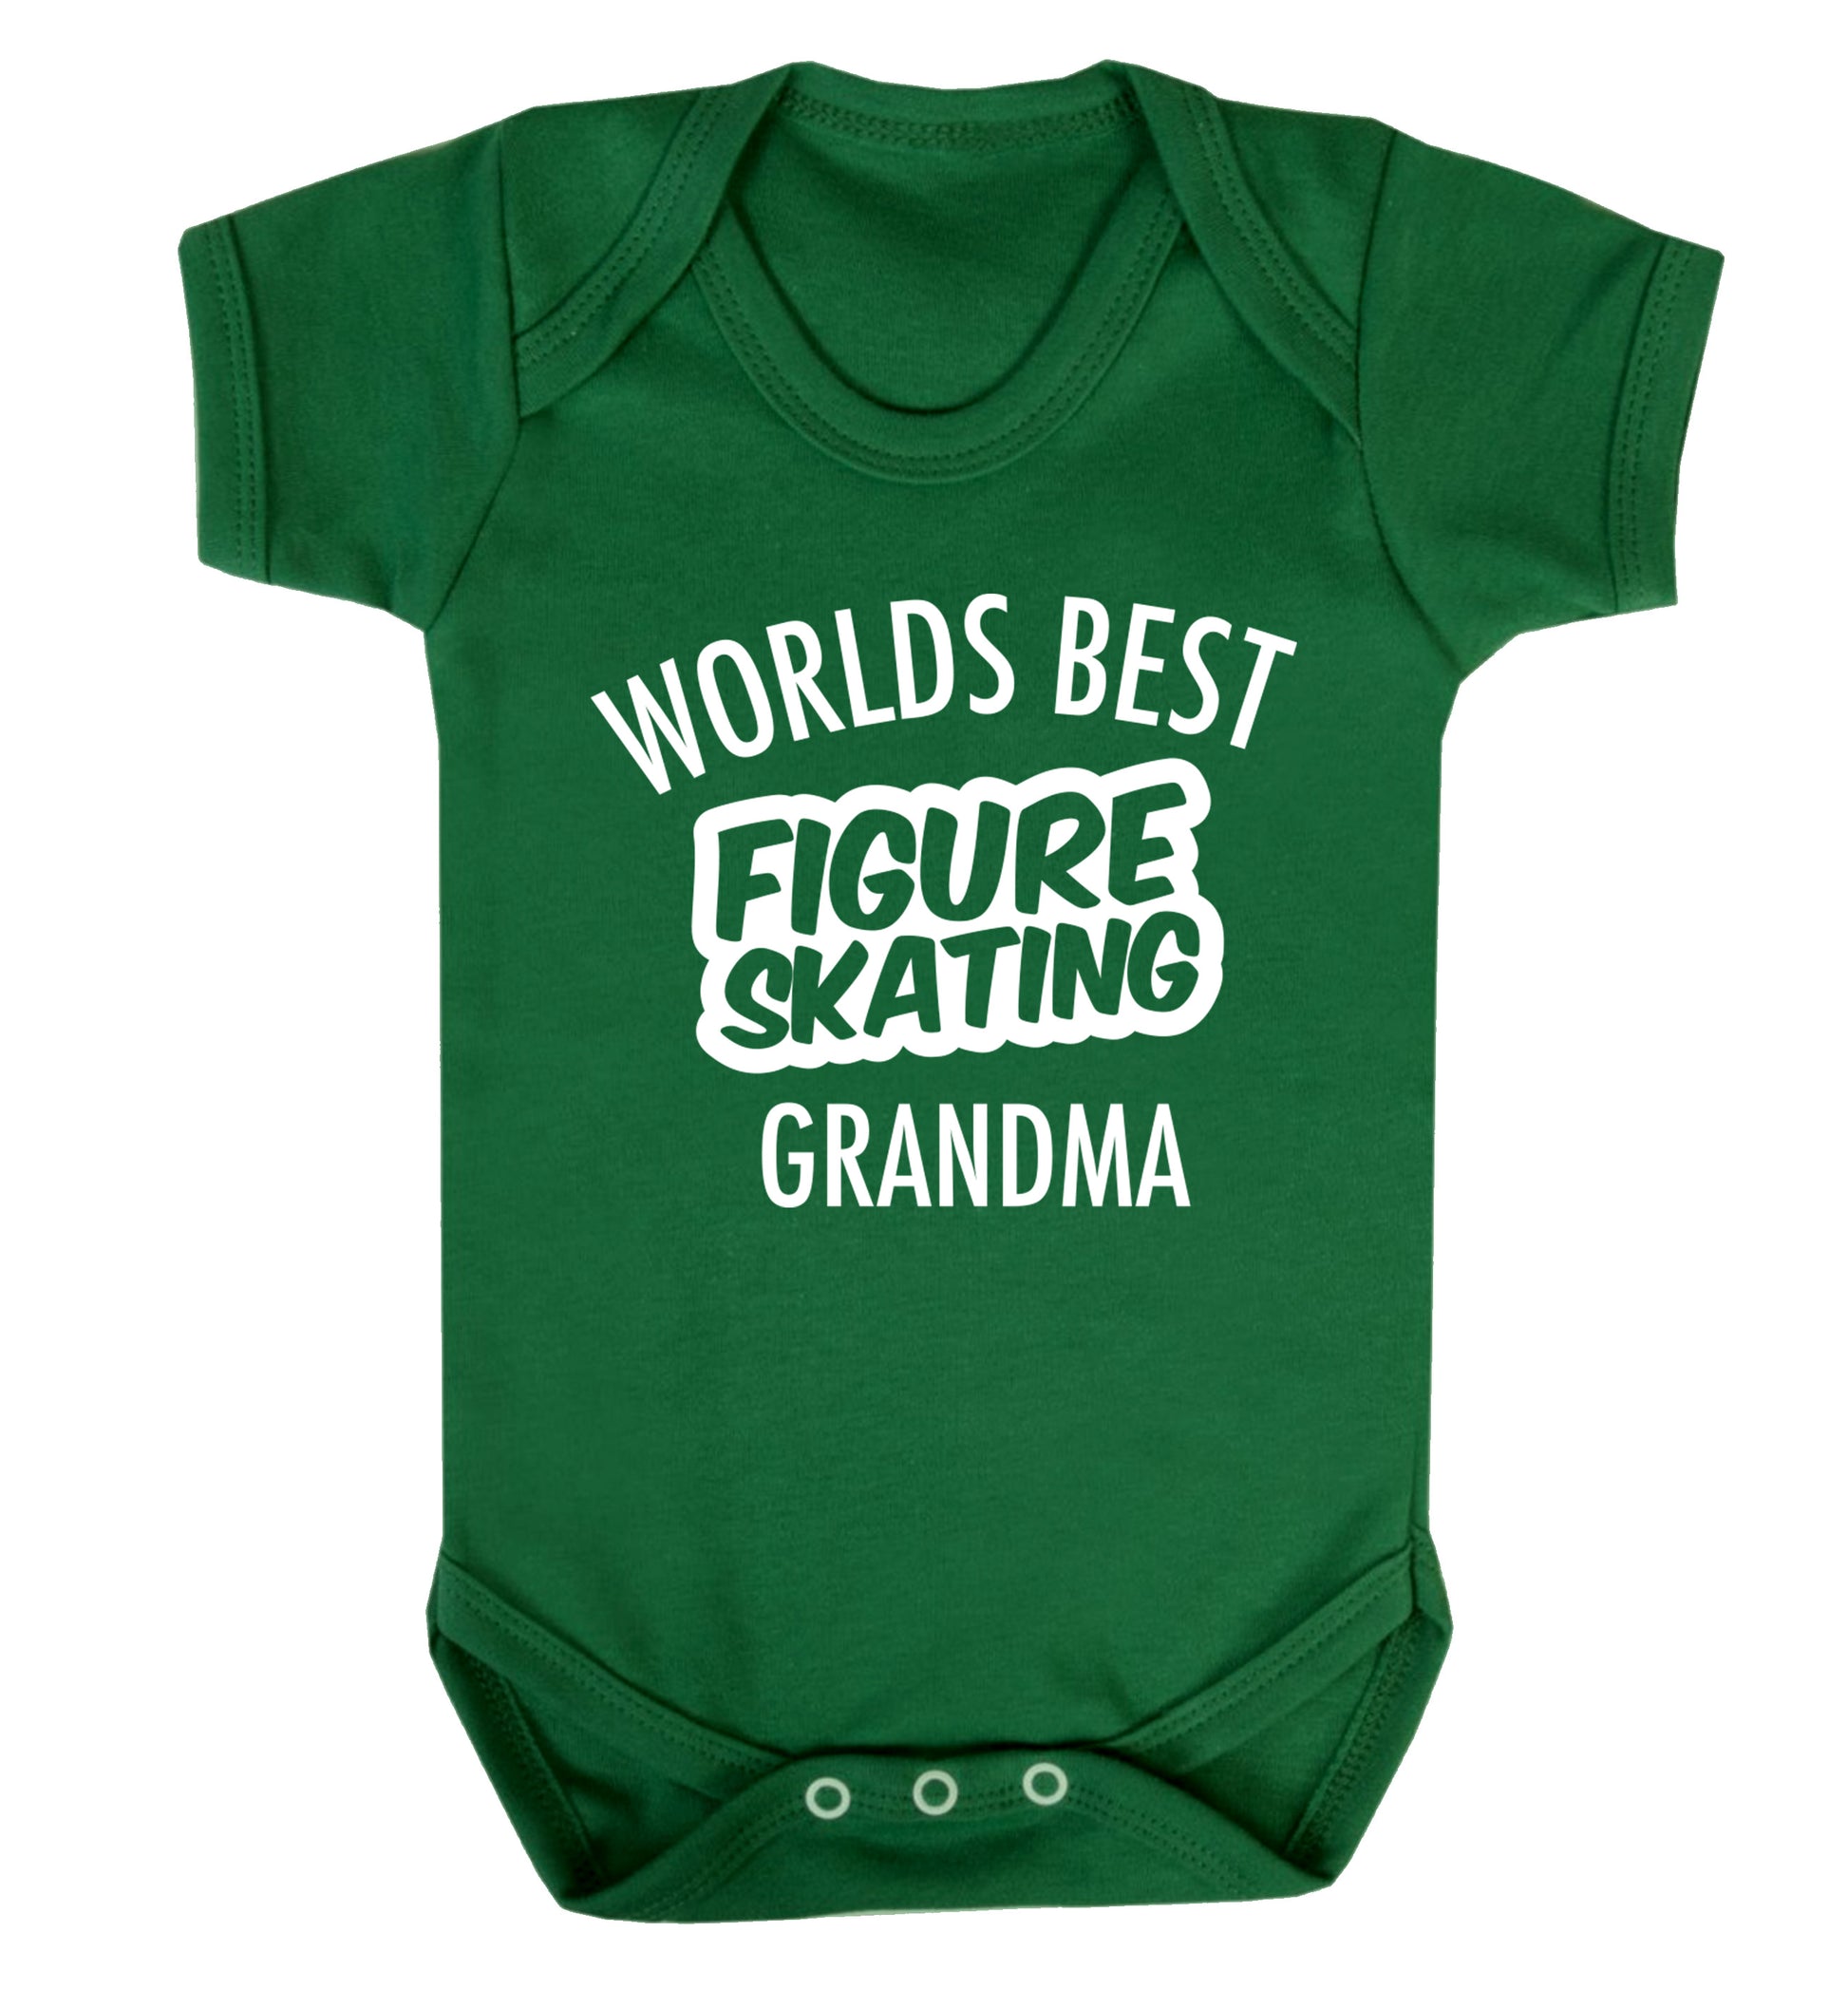 Worlds best figure skating grandma Baby Vest green 18-24 months